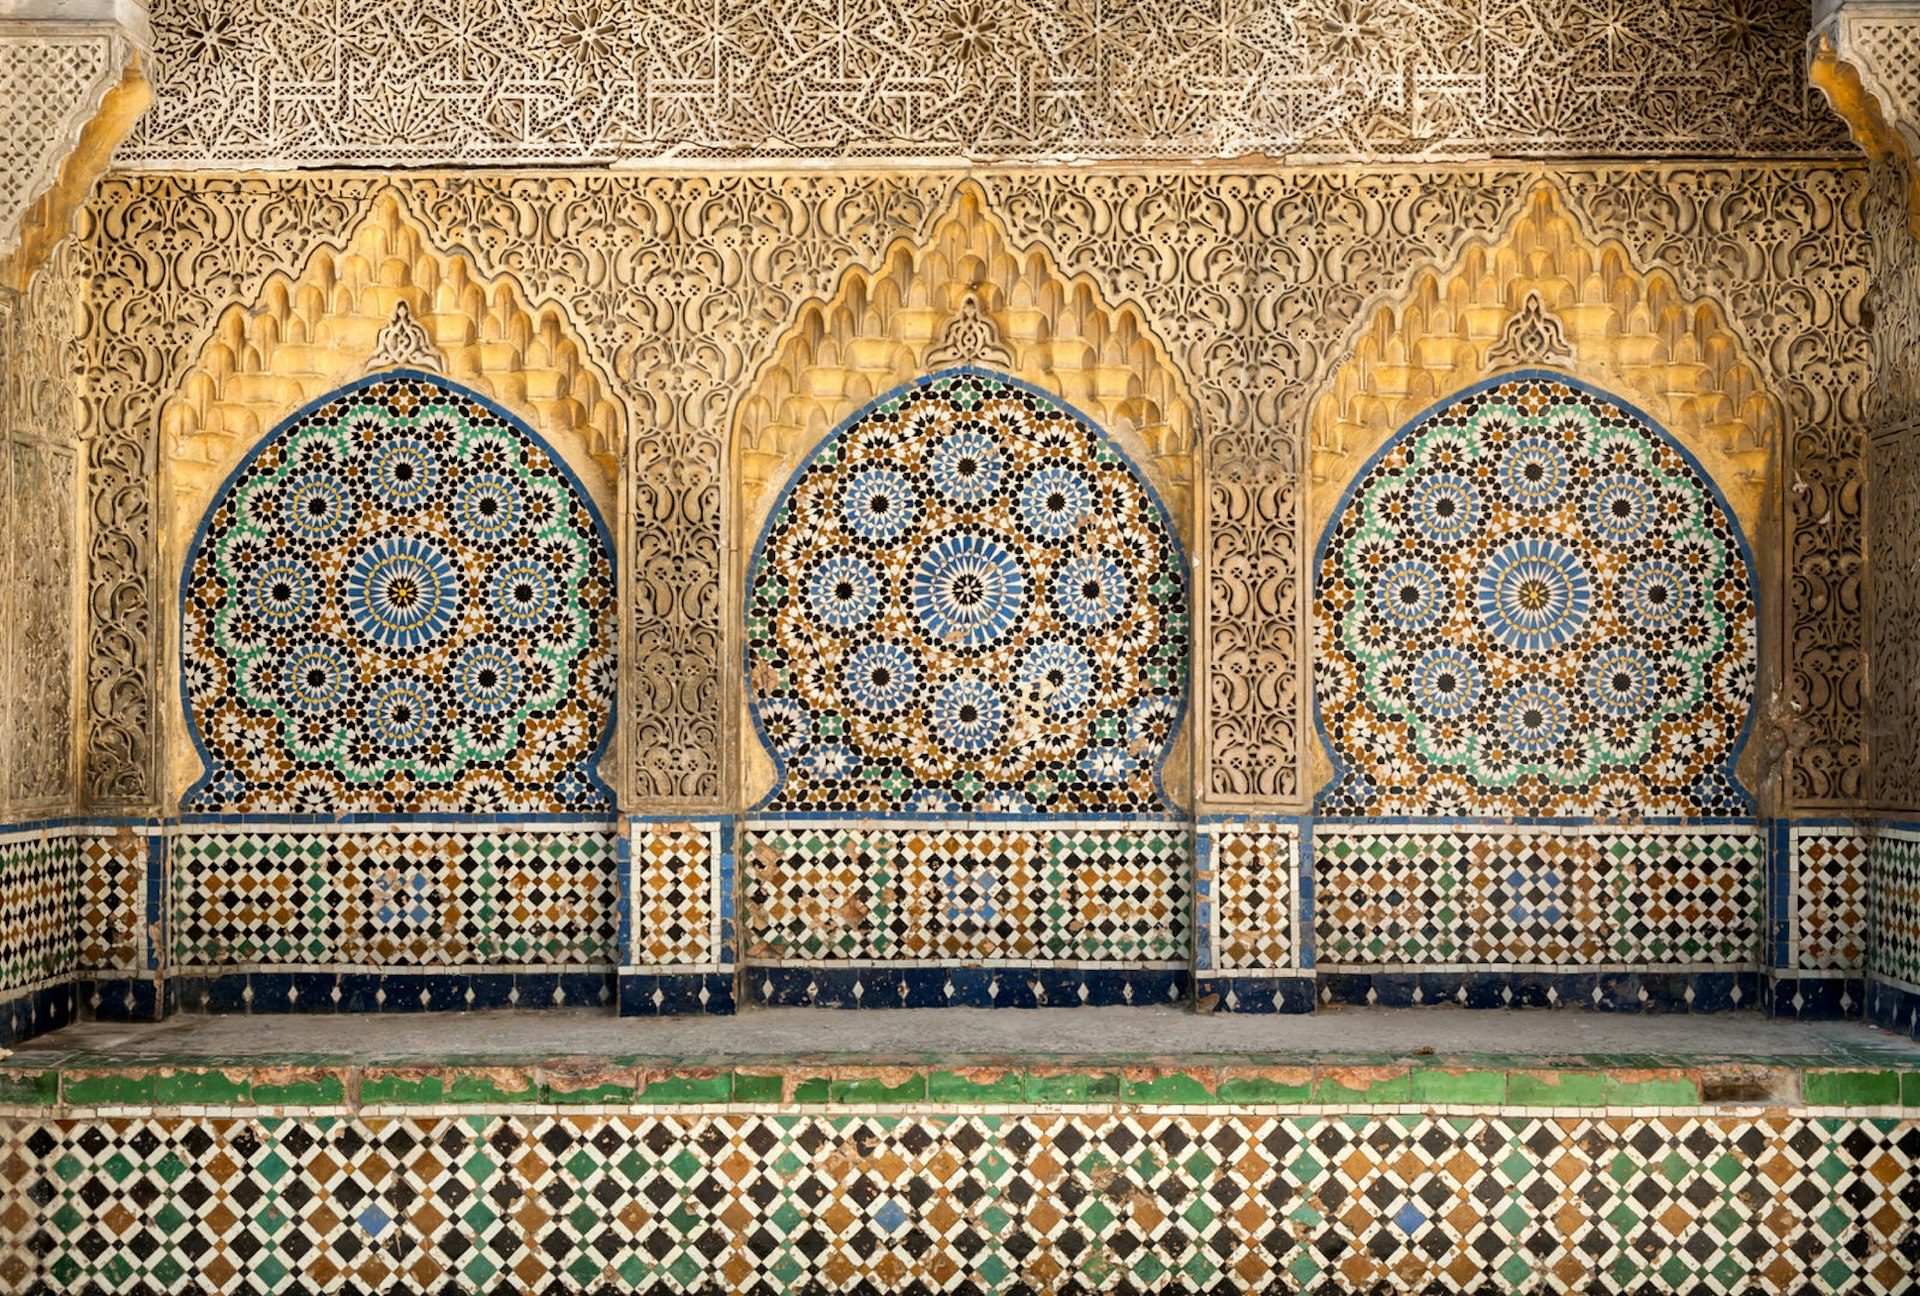 Ornate Moorish facade in the medina of Tangier, Morocco